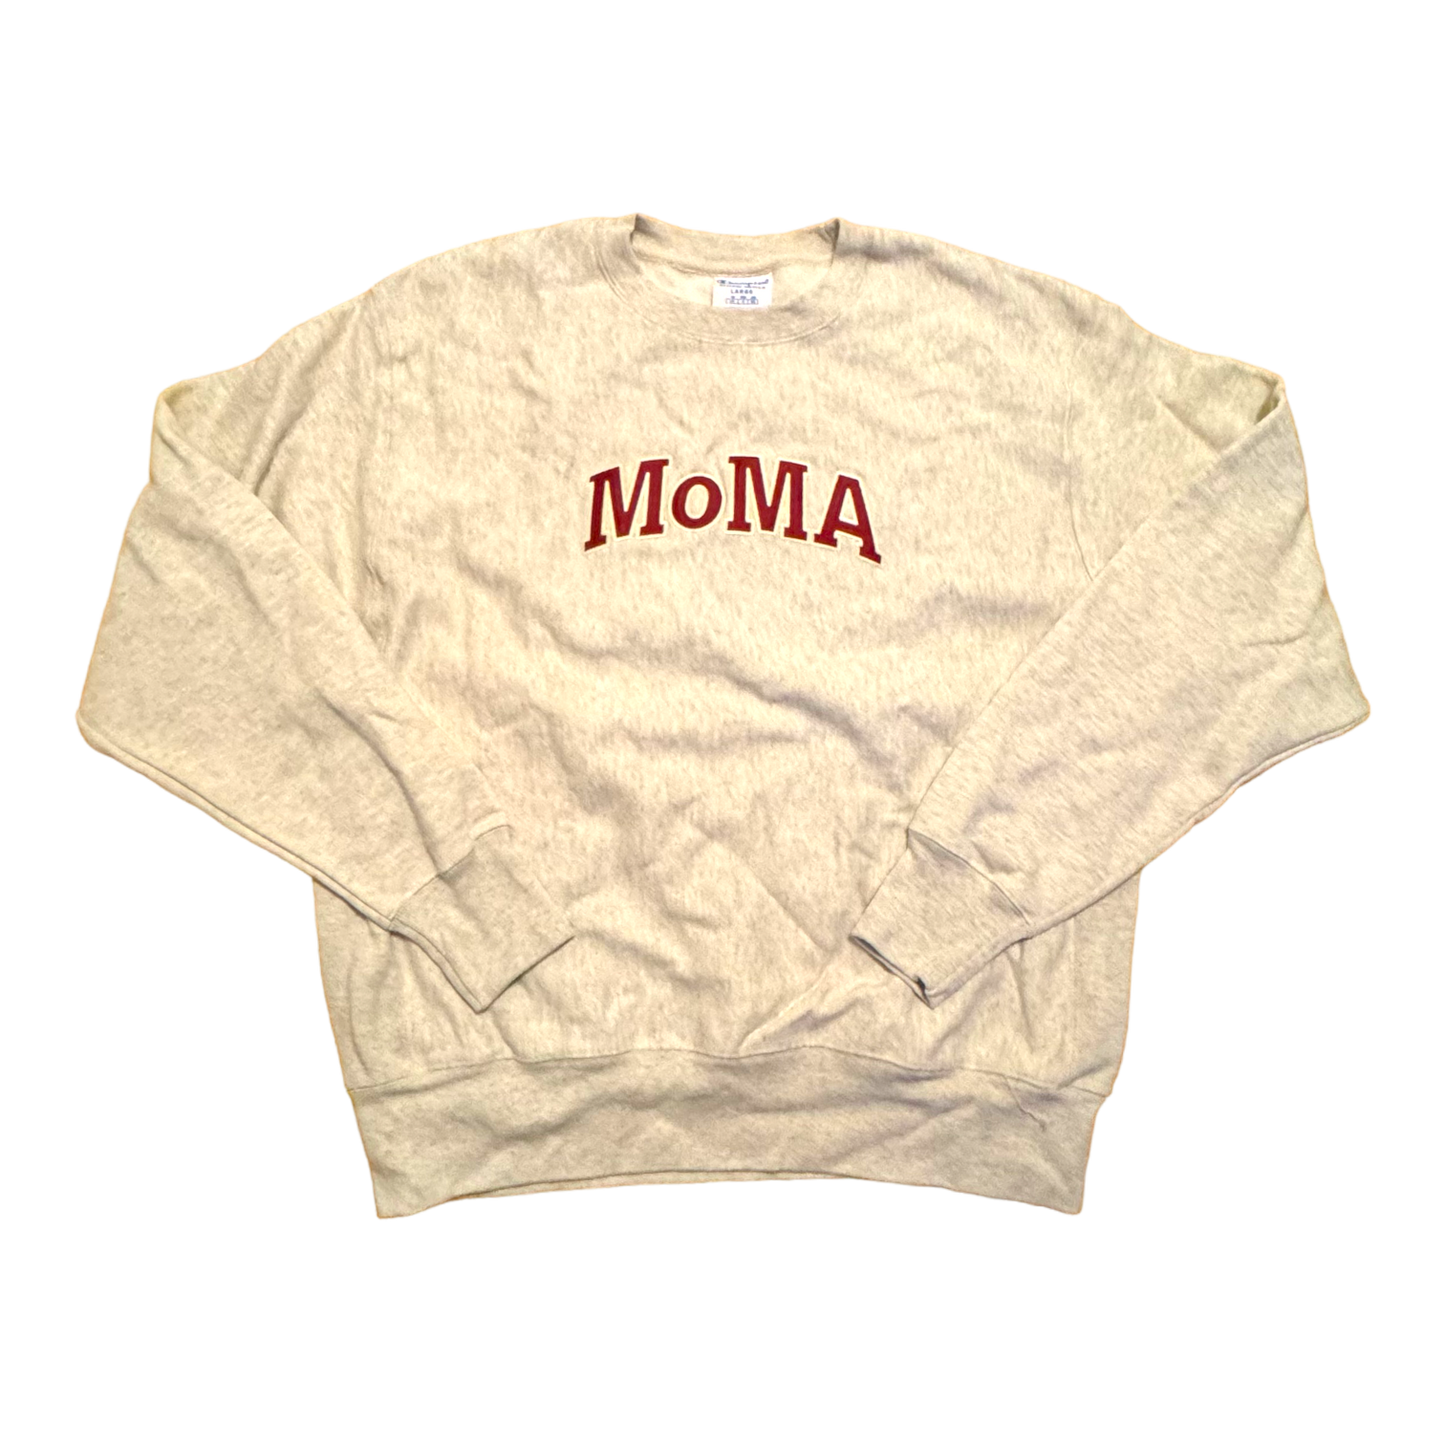 Champion - MOMA Reverse Weave Heather Grey Crewneck Sweatshirt